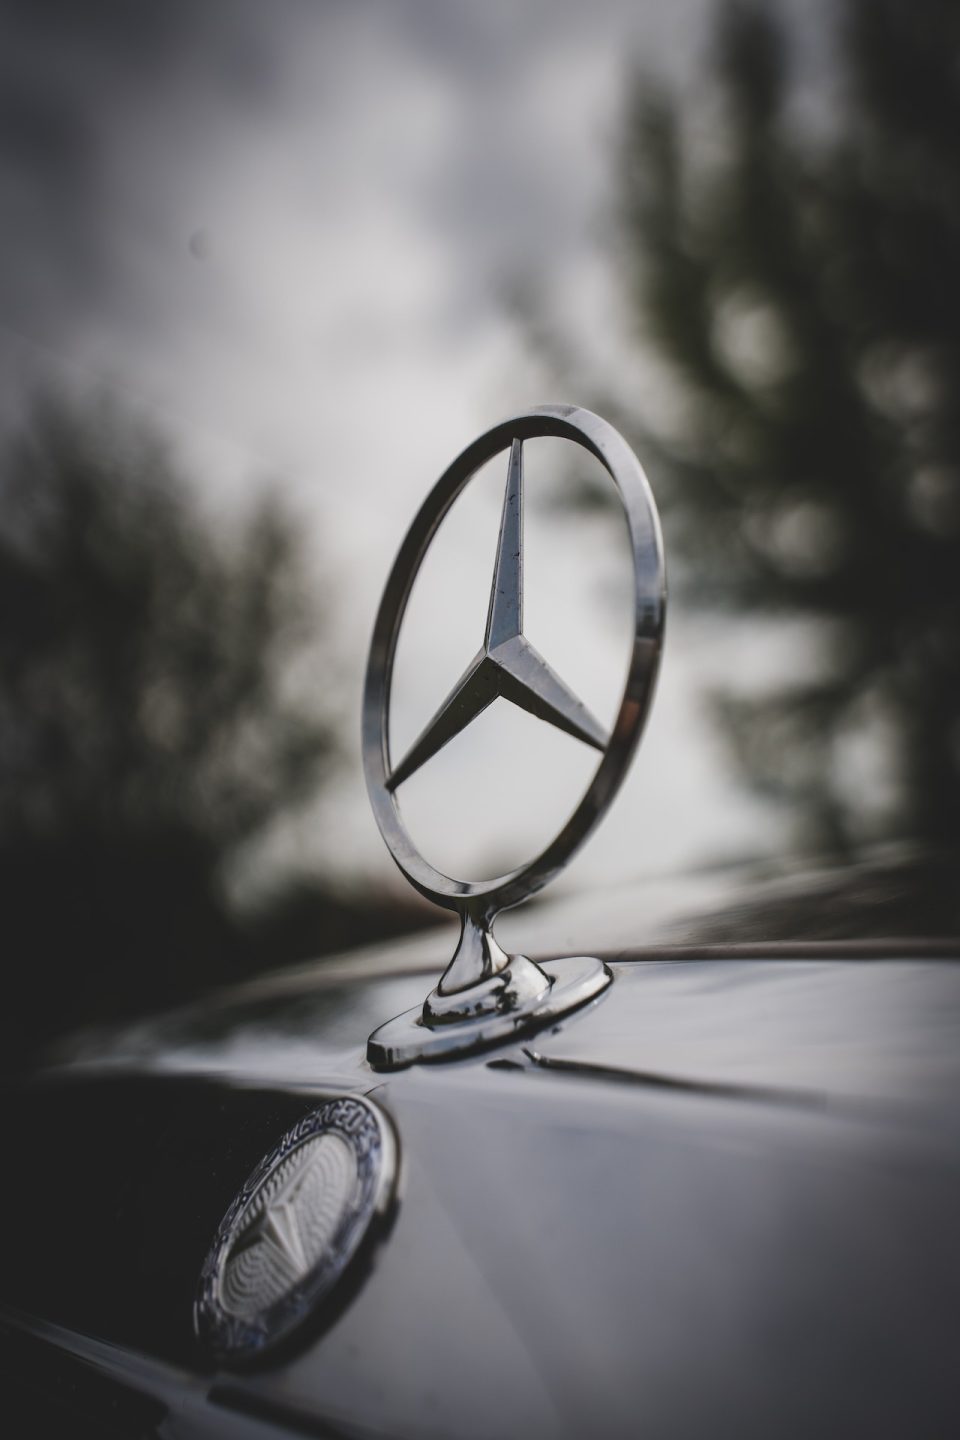 Mercedes-Benz concept vehicles